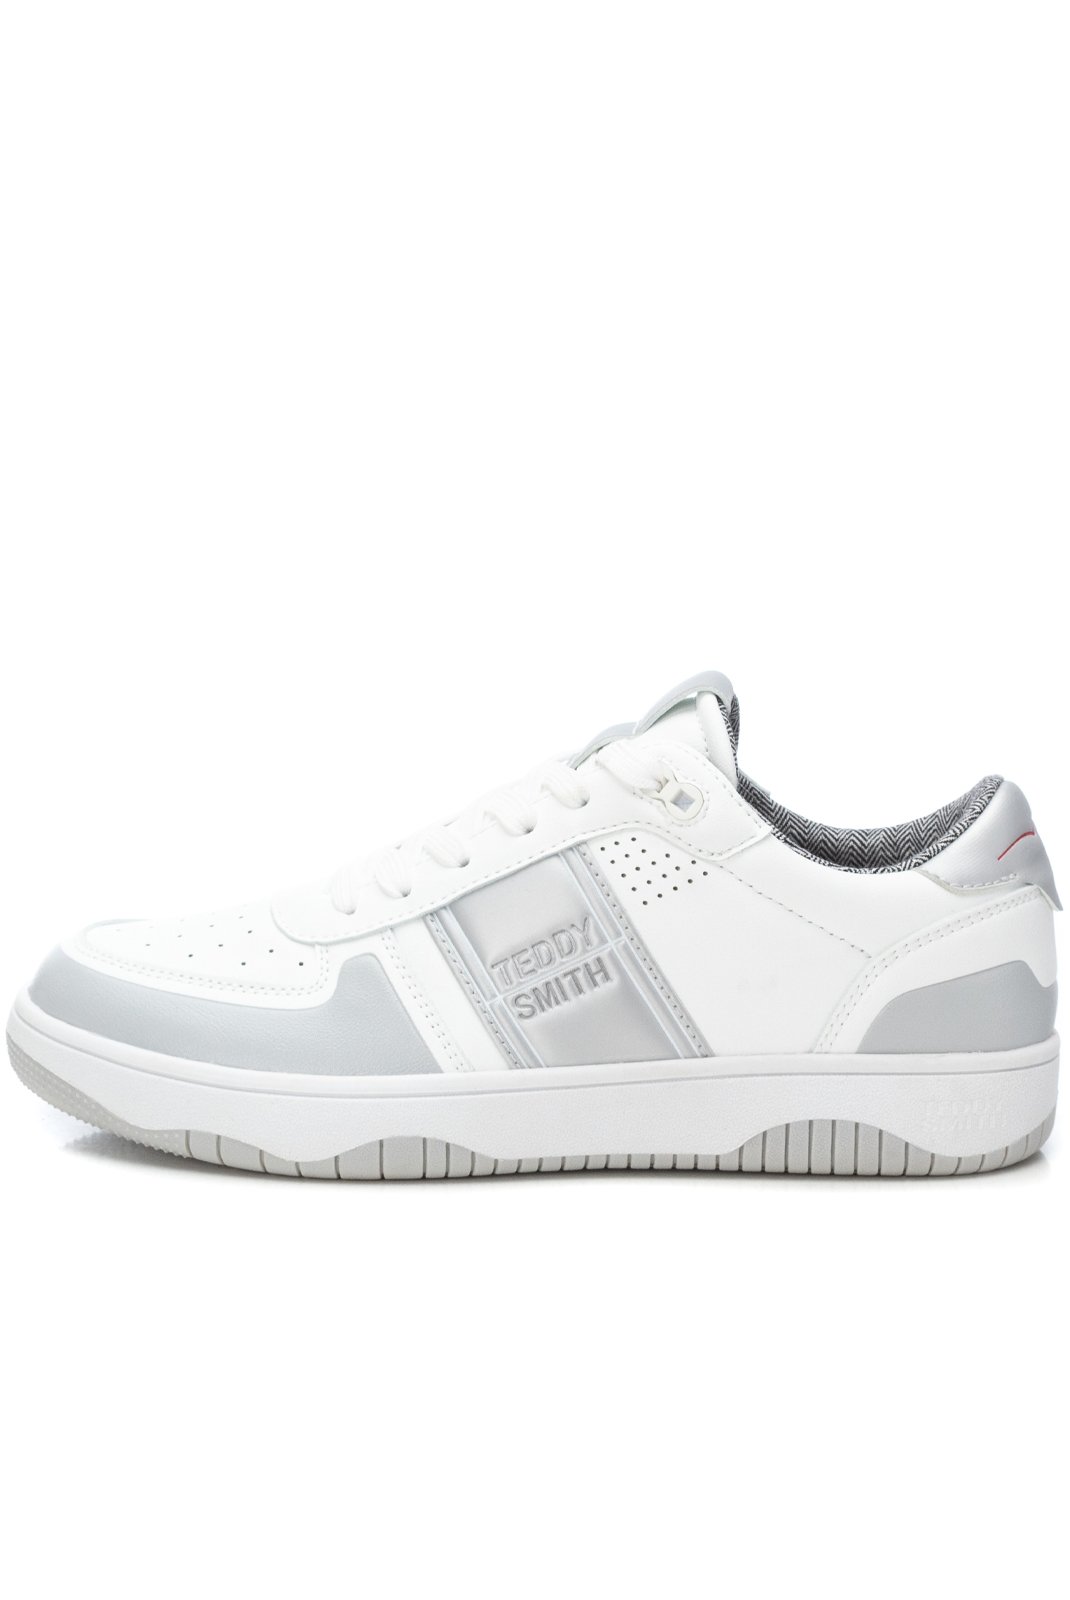 Sneakers / Sport  Teddy smith 78148 WHITE